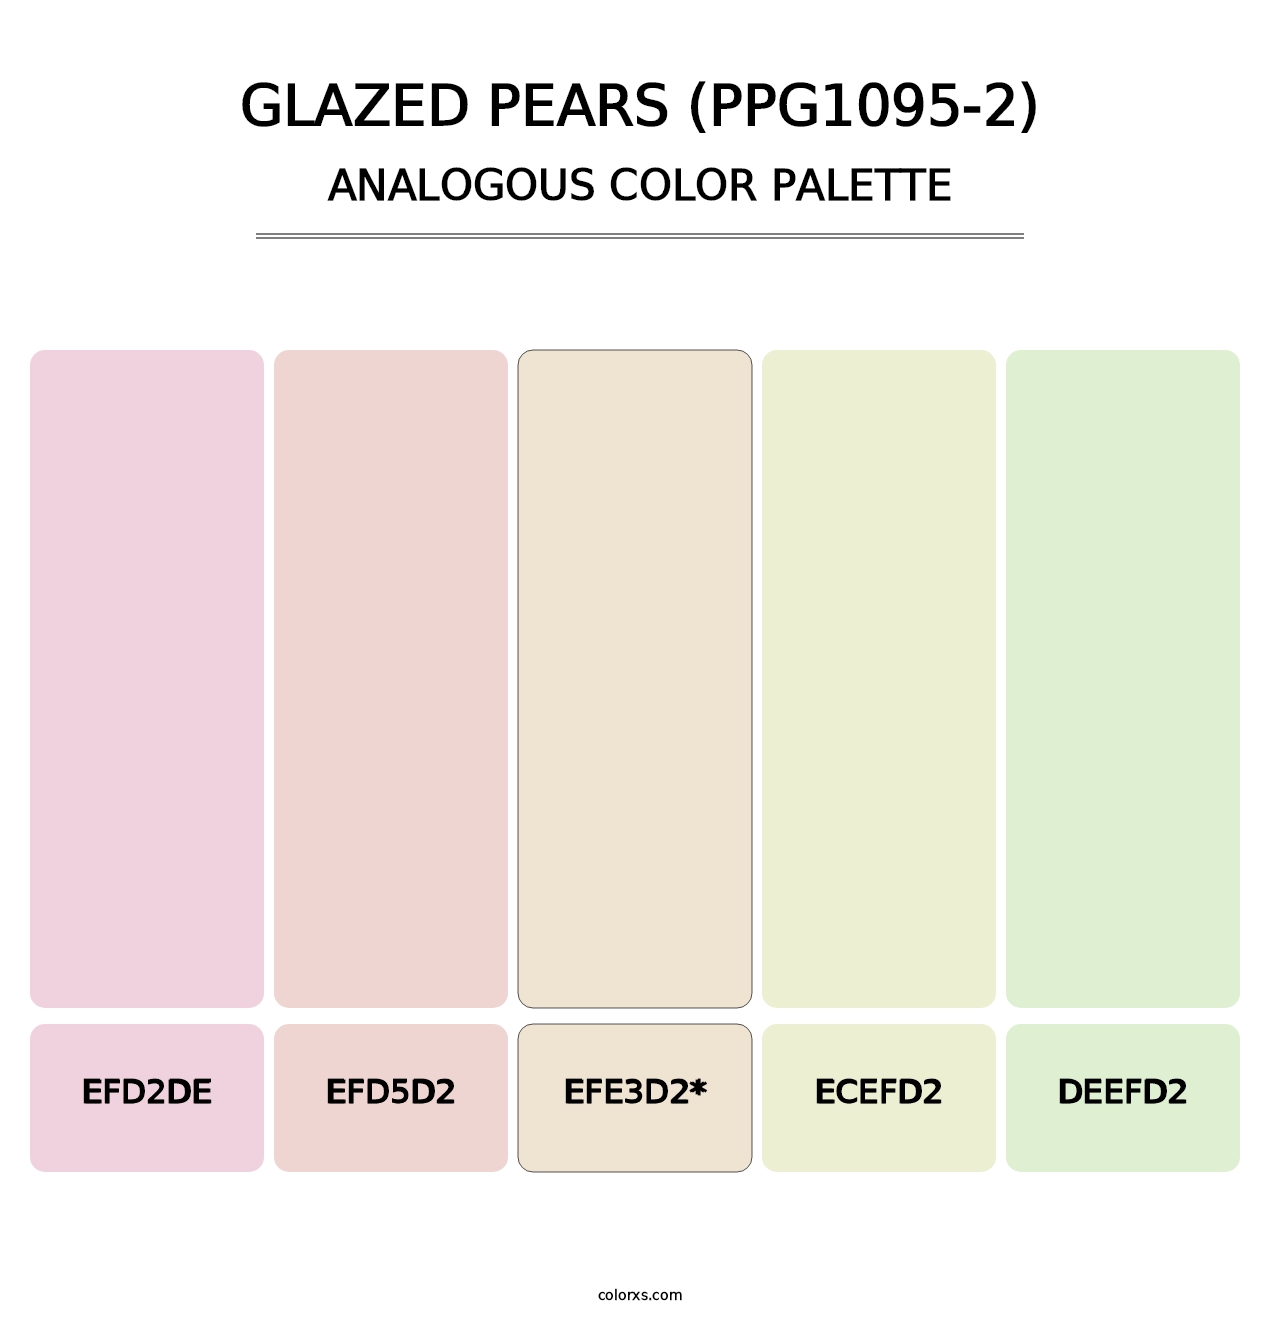 Glazed Pears (PPG1095-2) - Analogous Color Palette